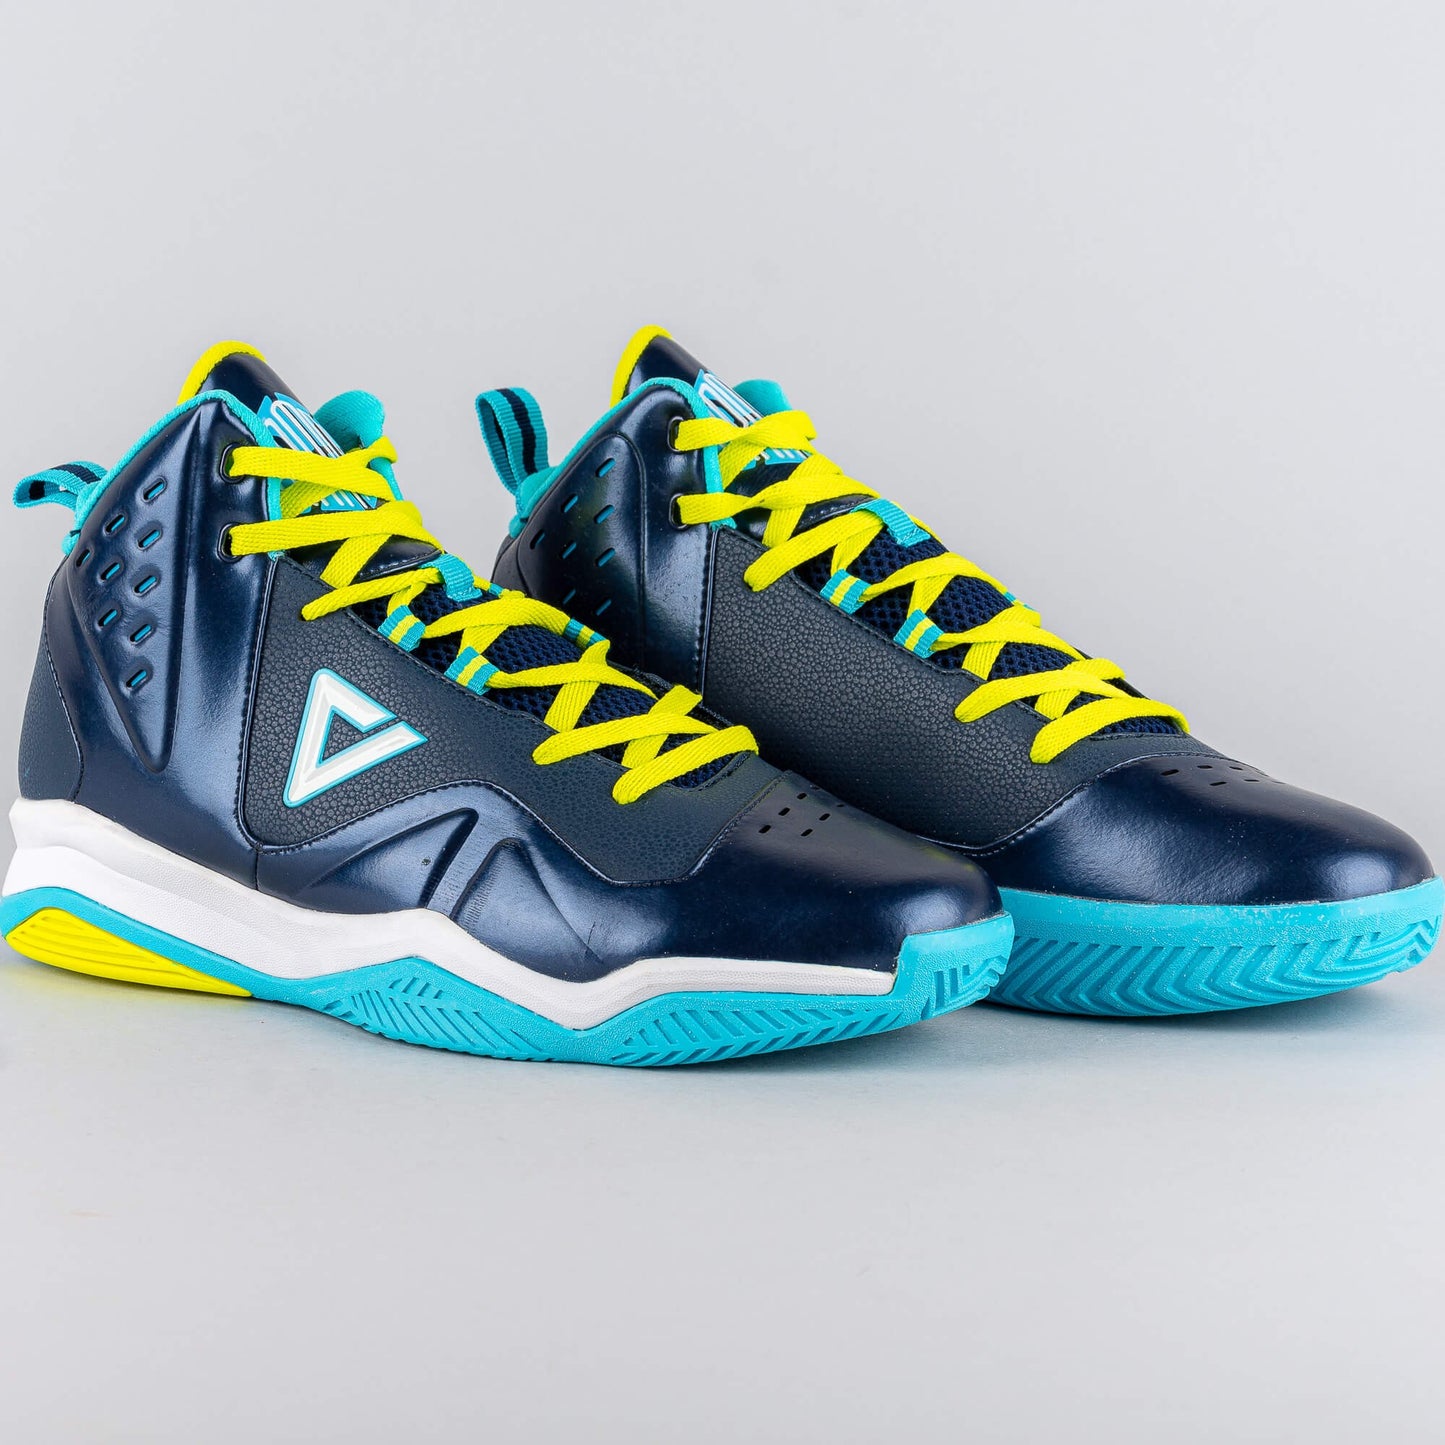 Peak Basketball Shoes Armor III Dress Blue